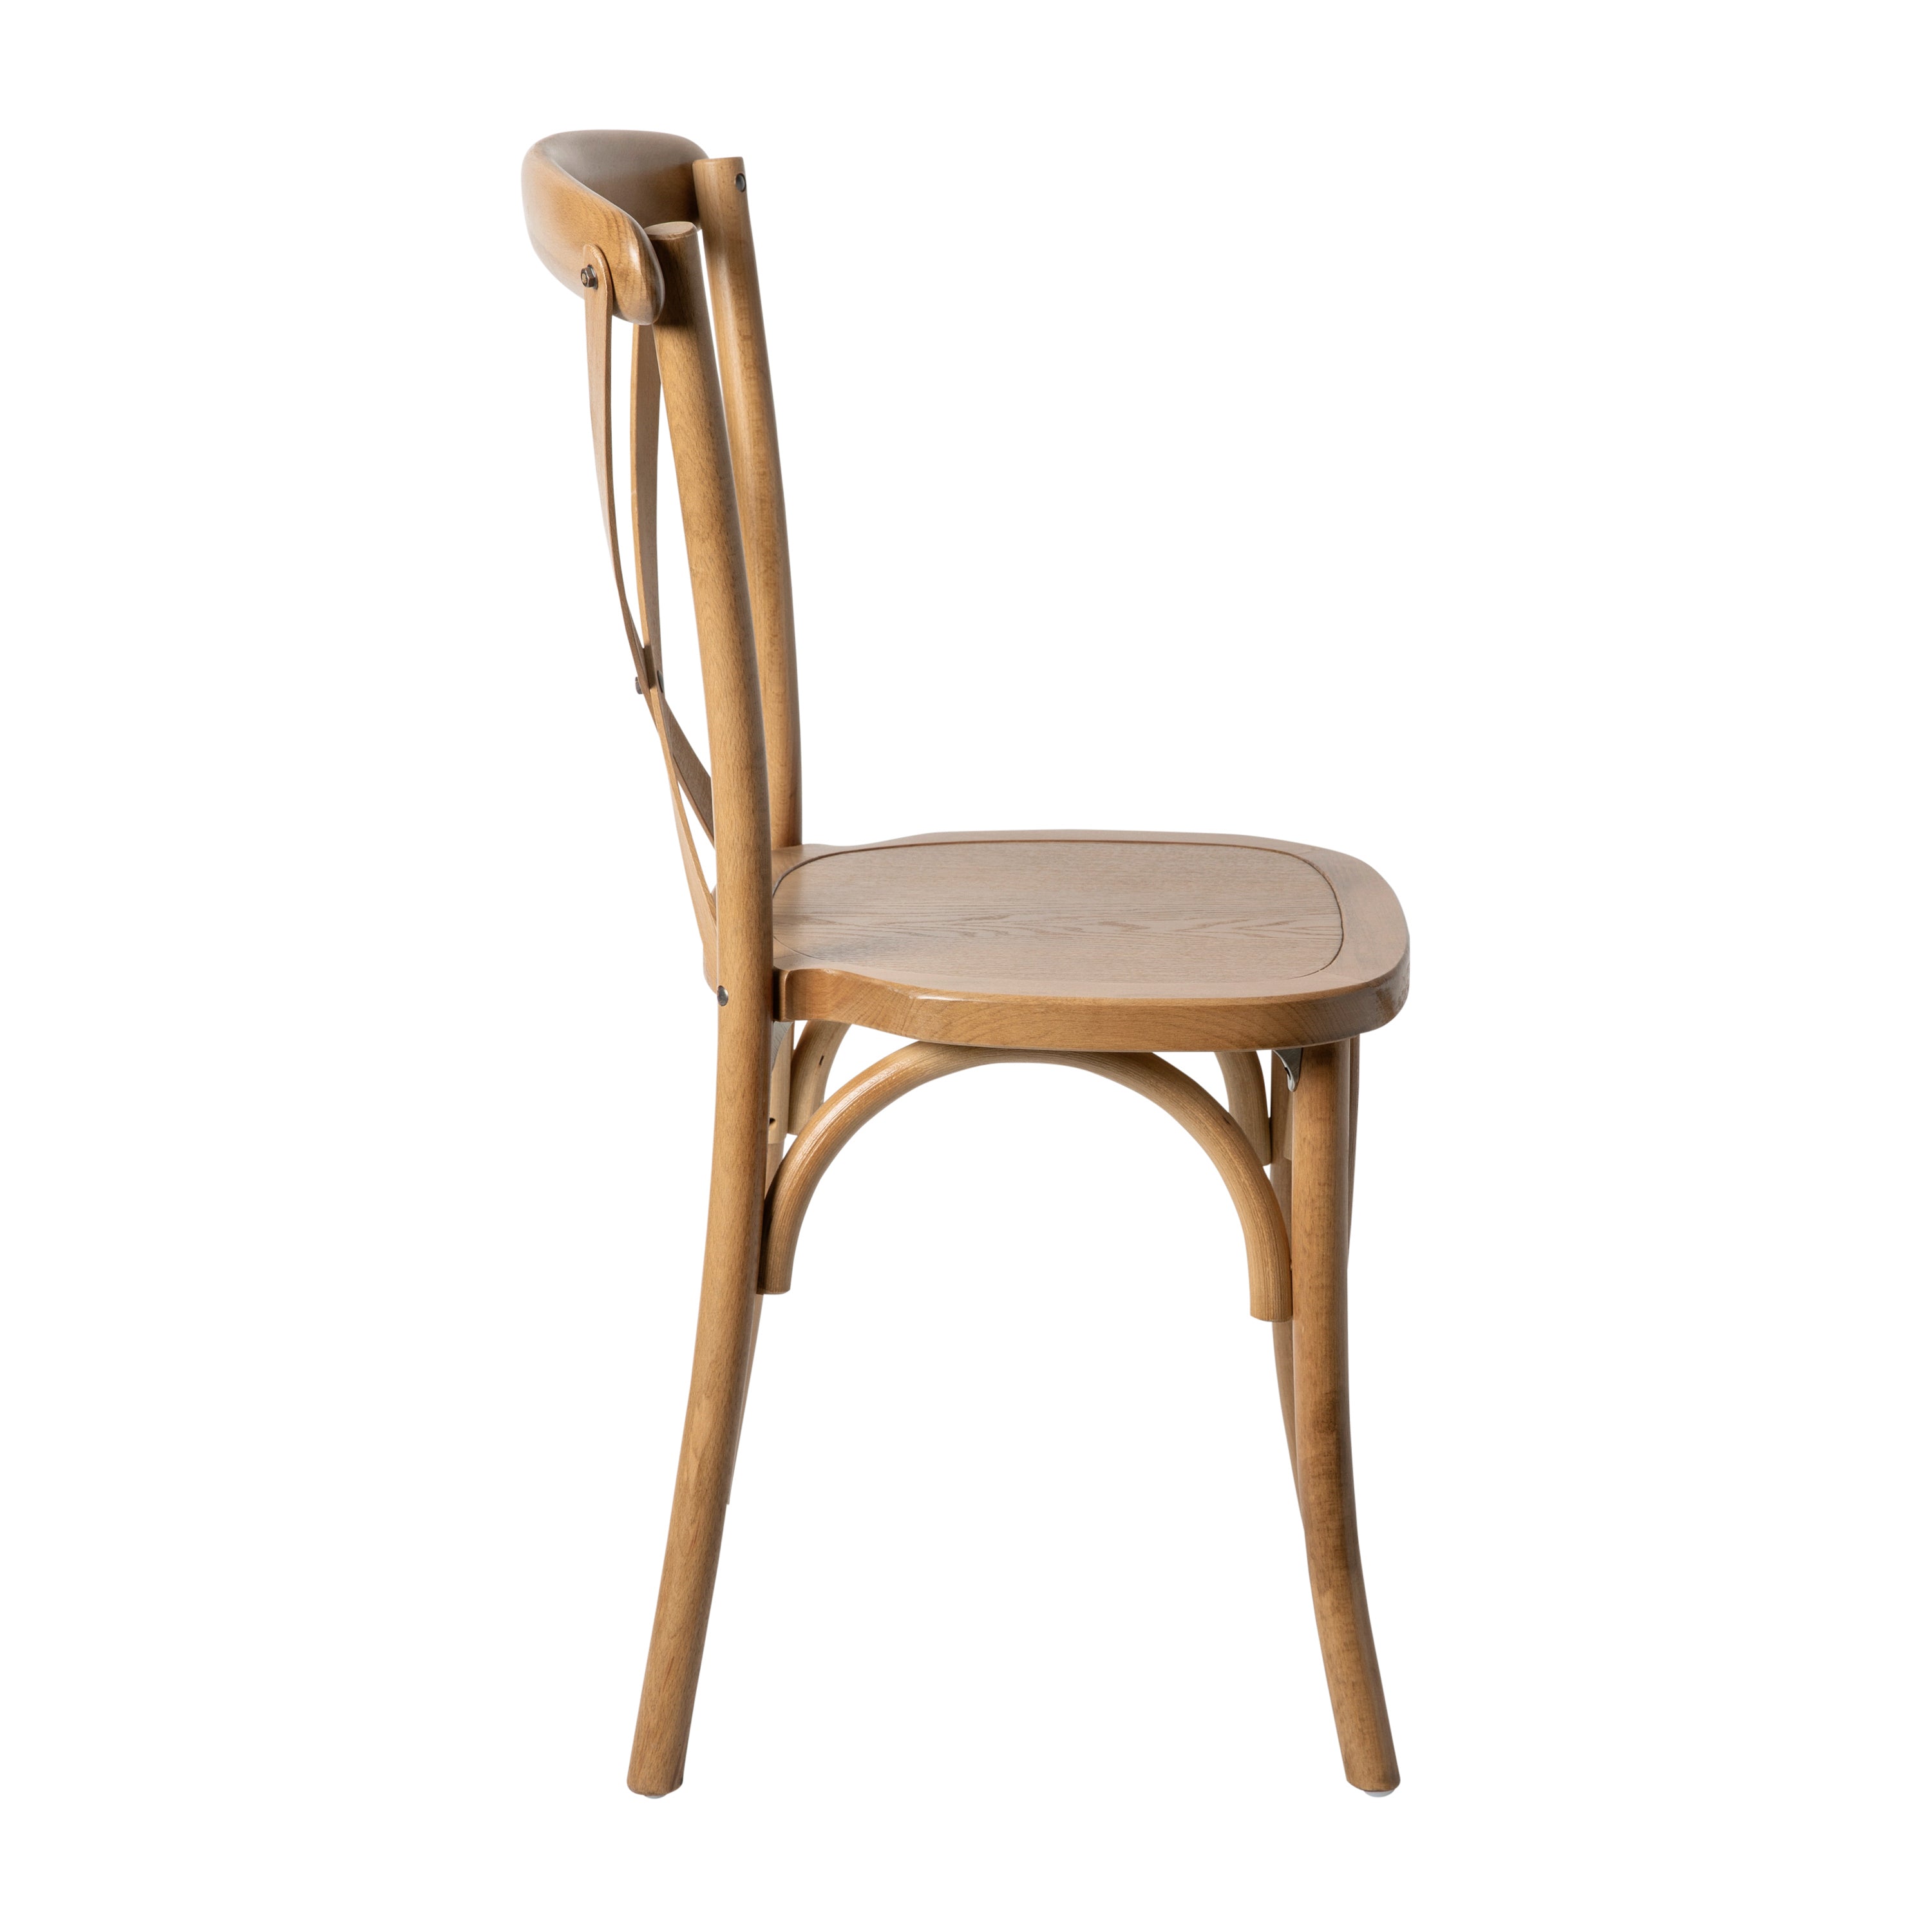 Advantage X-Back Chair-Cross Back Chair-Flash Furniture-Wall2Wall Furnishings